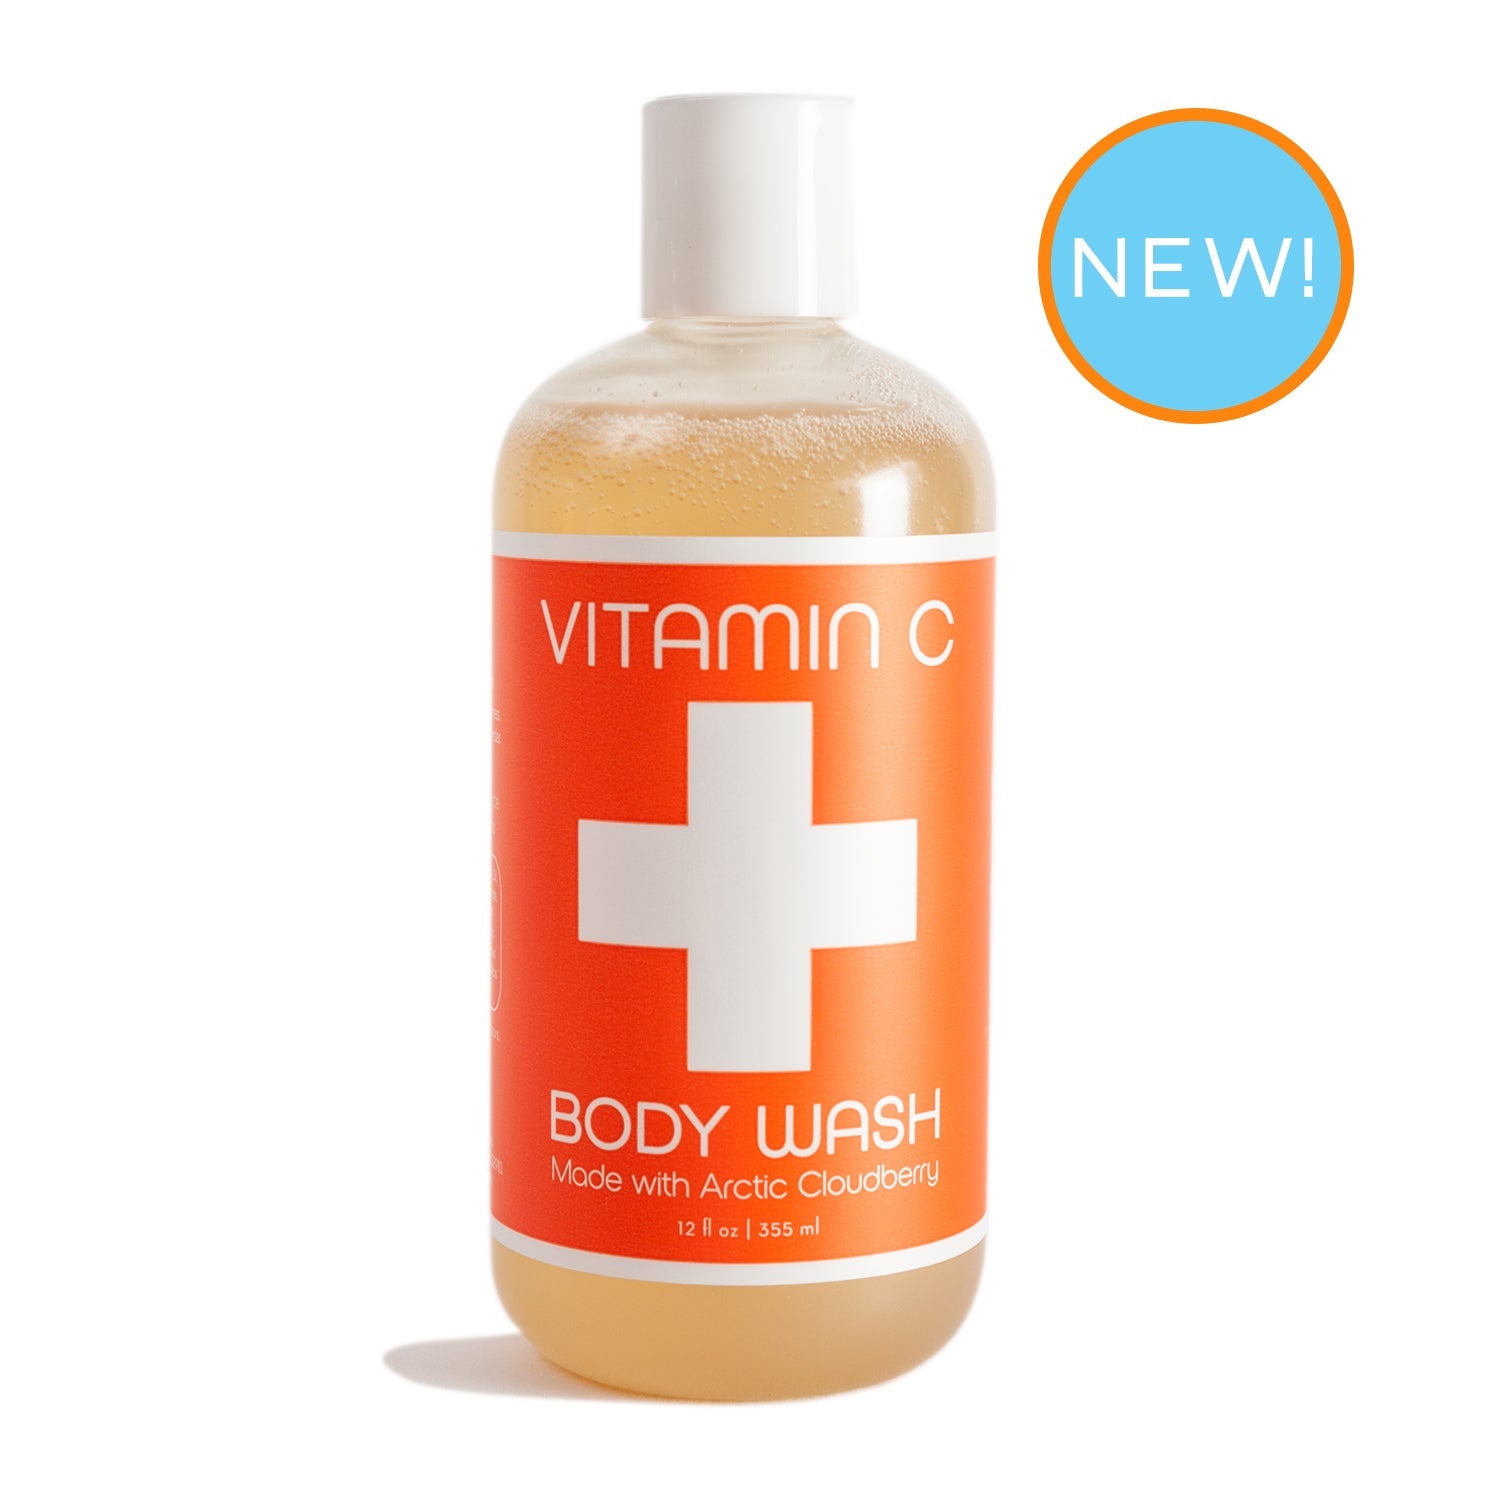 Nordic+Wellness Vitamin C Organic Body Wash - 12-fl oz. - Mellow Monkey